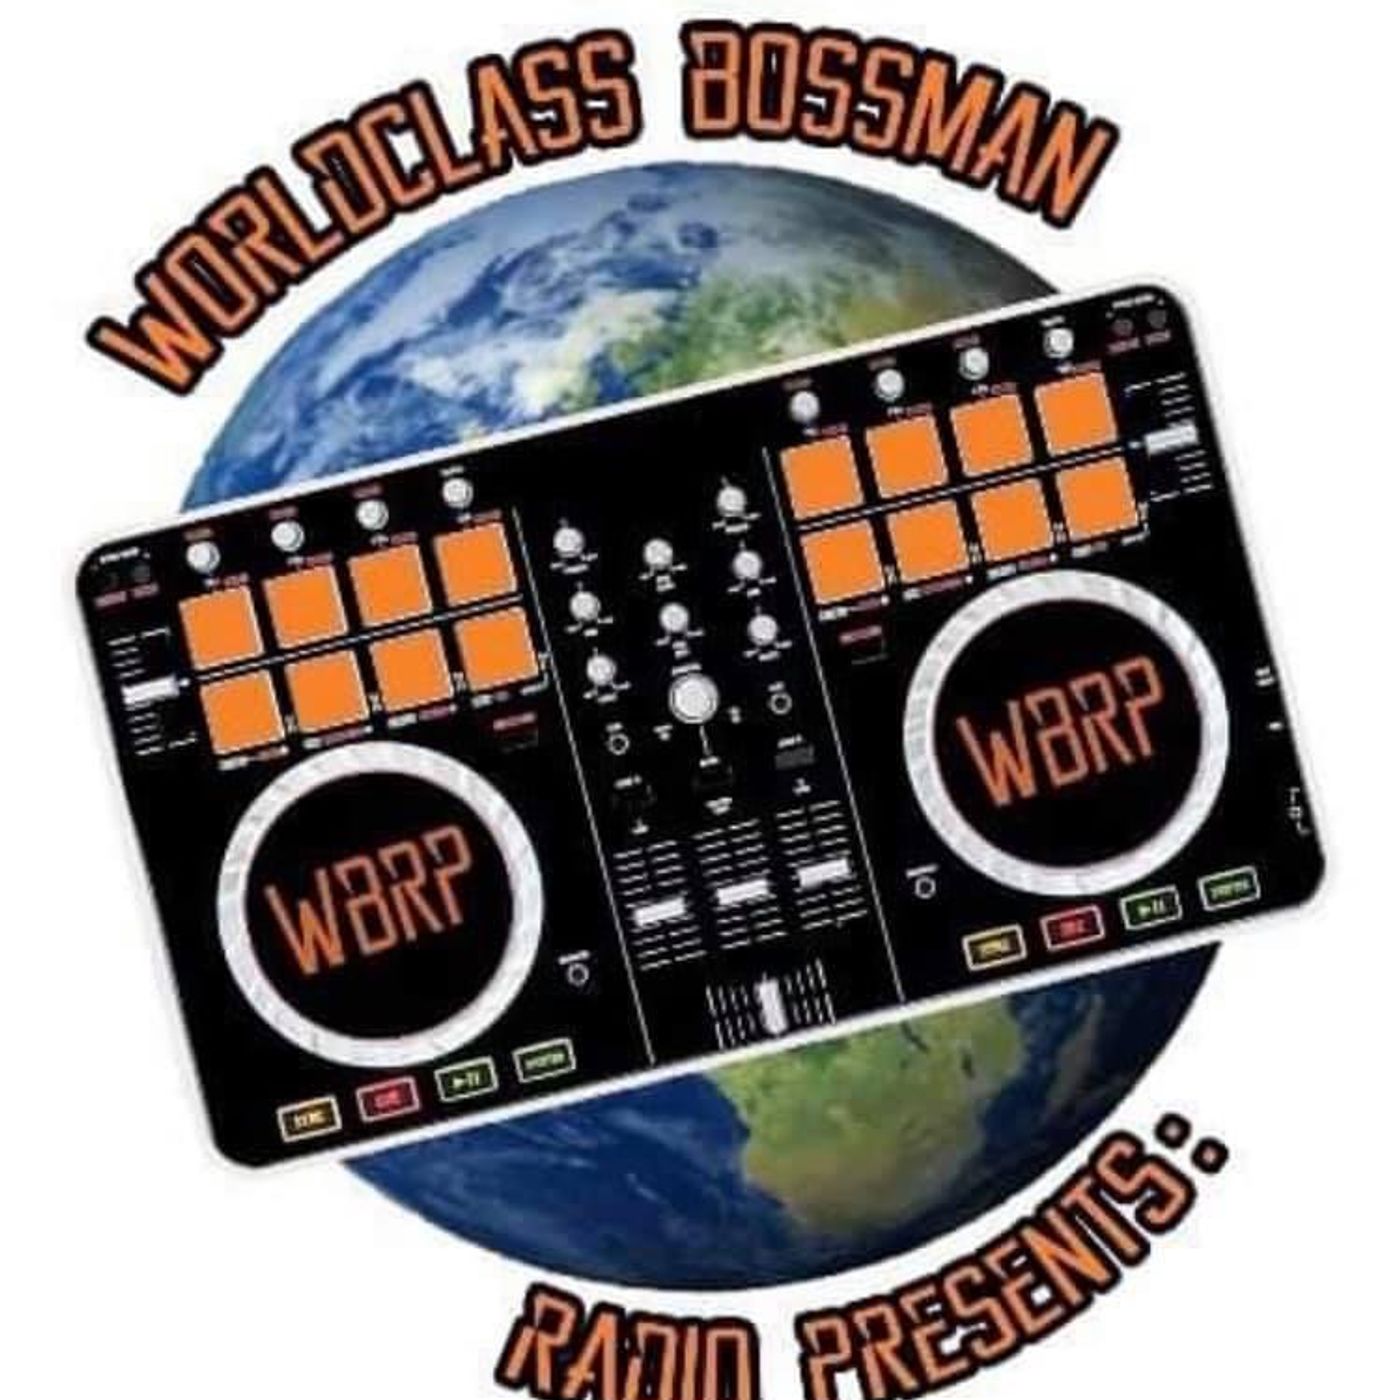 Sweet Musical Sunday 12-05-21 Worldclass Bossman Radio Presents